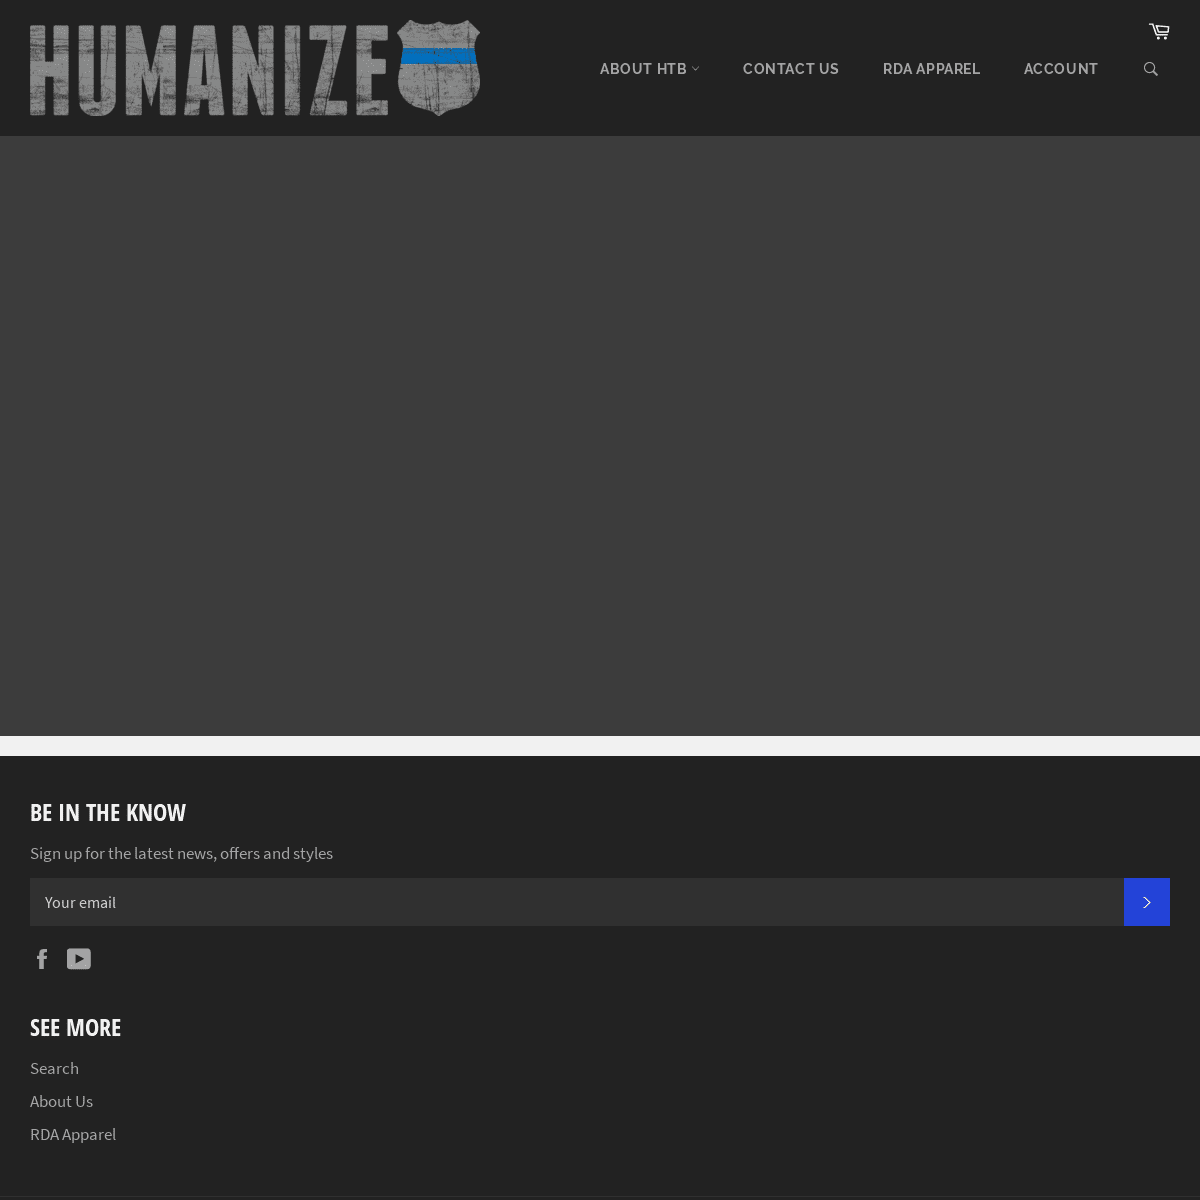 A complete backup of humanizingthebadge.com